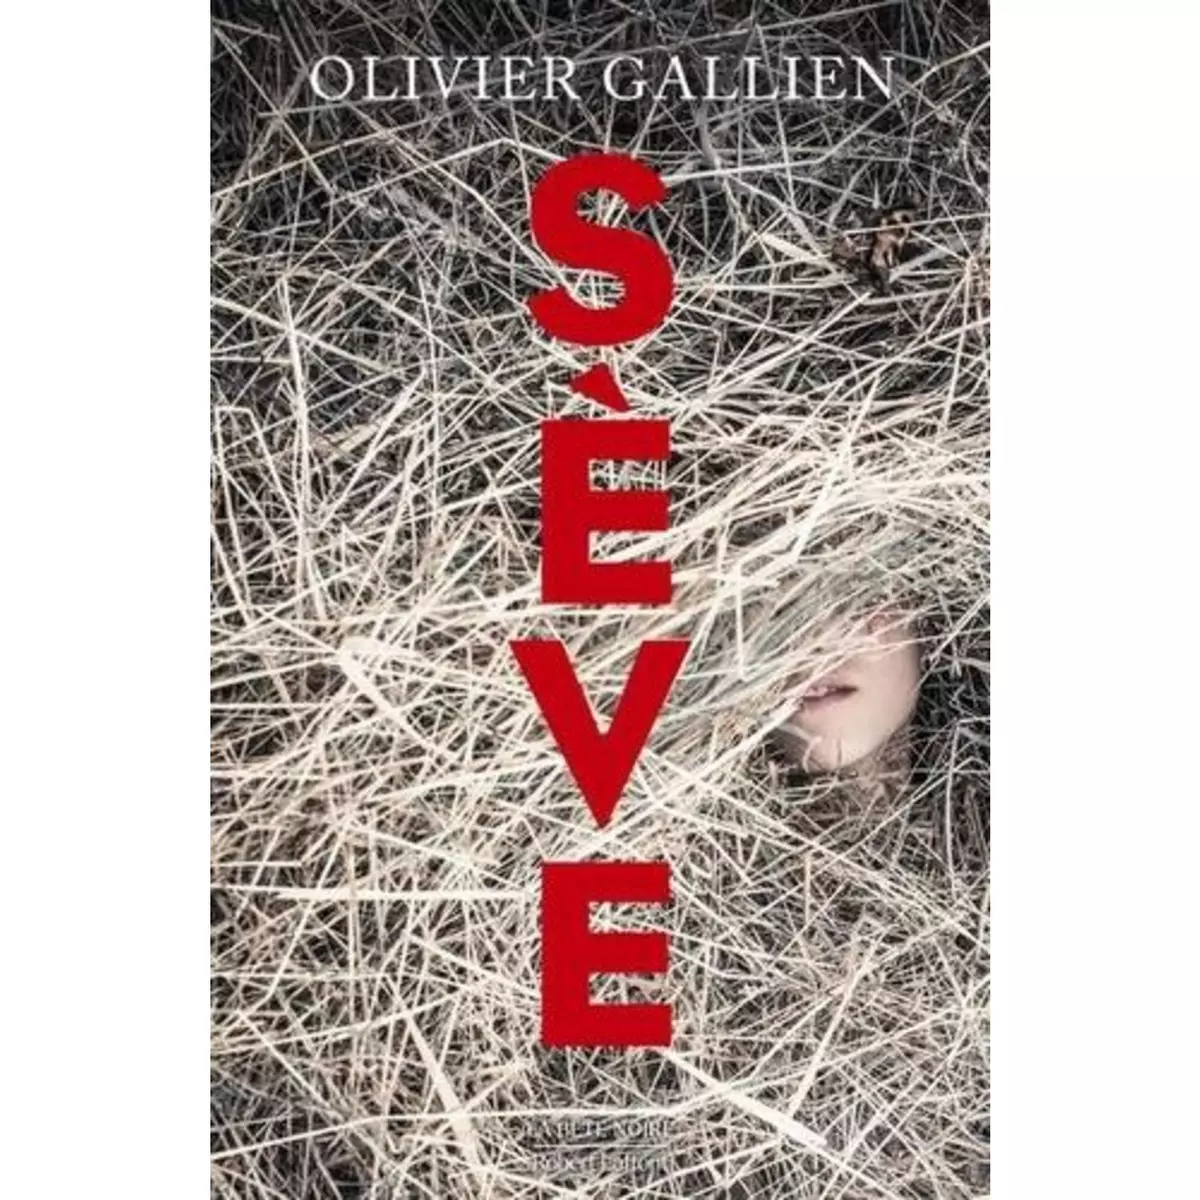  SEVE, Gallien Olivier